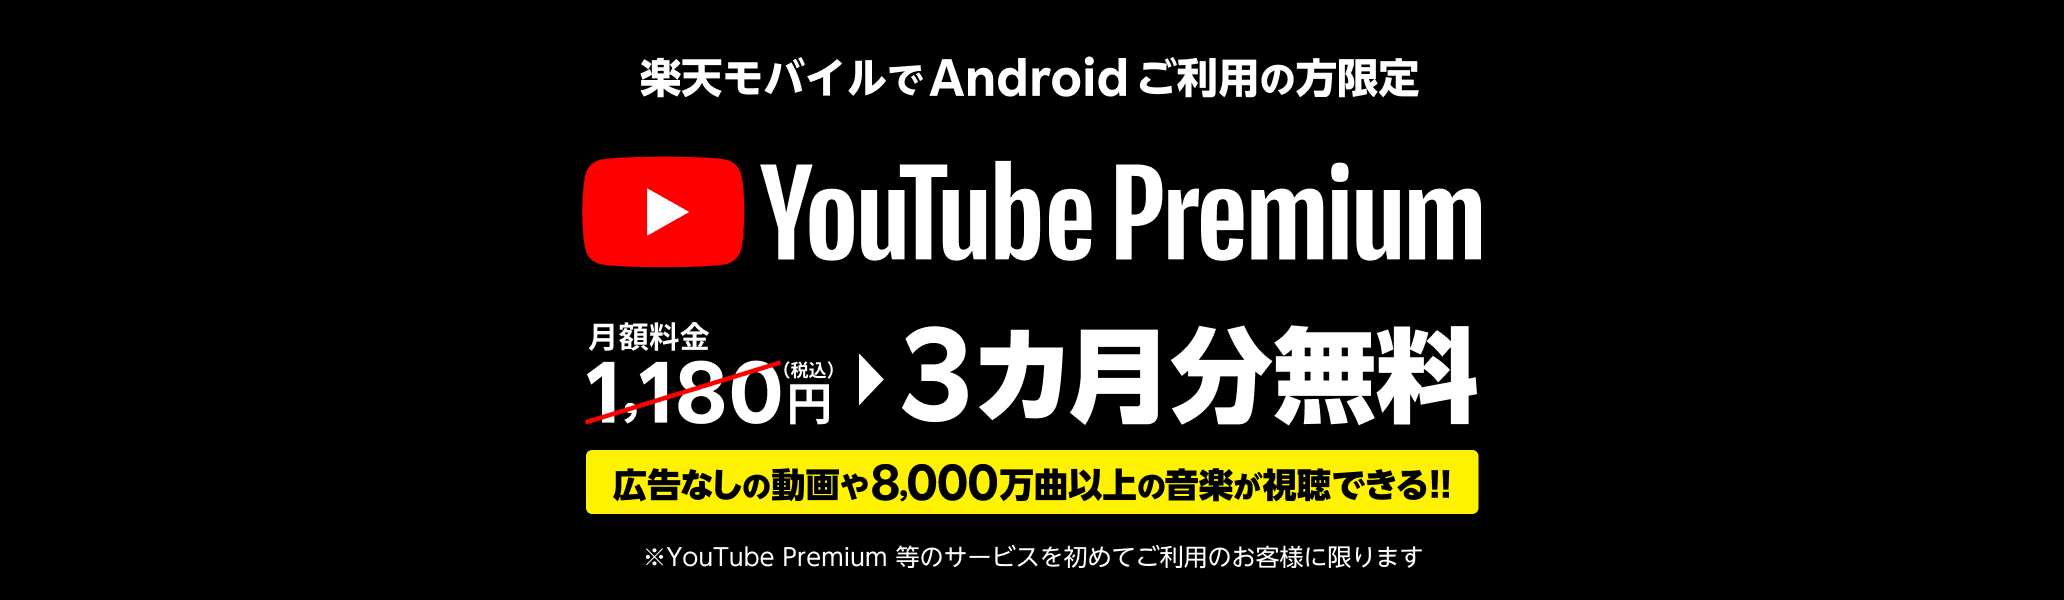 YouTube Premium 3ヶ月無料キャンペーン